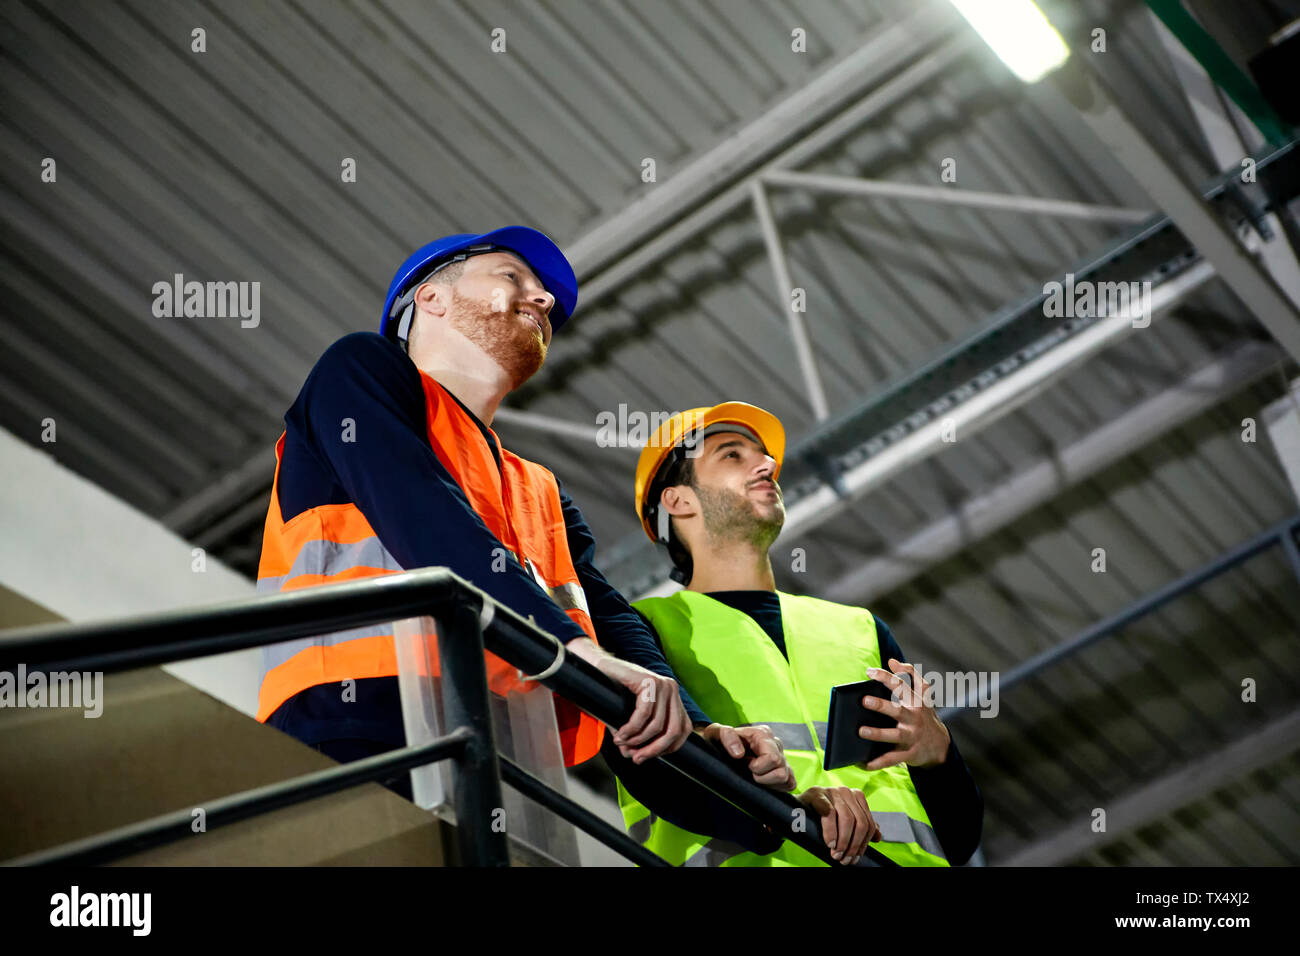 Two workers standing on upper floor in factory Stock Photo